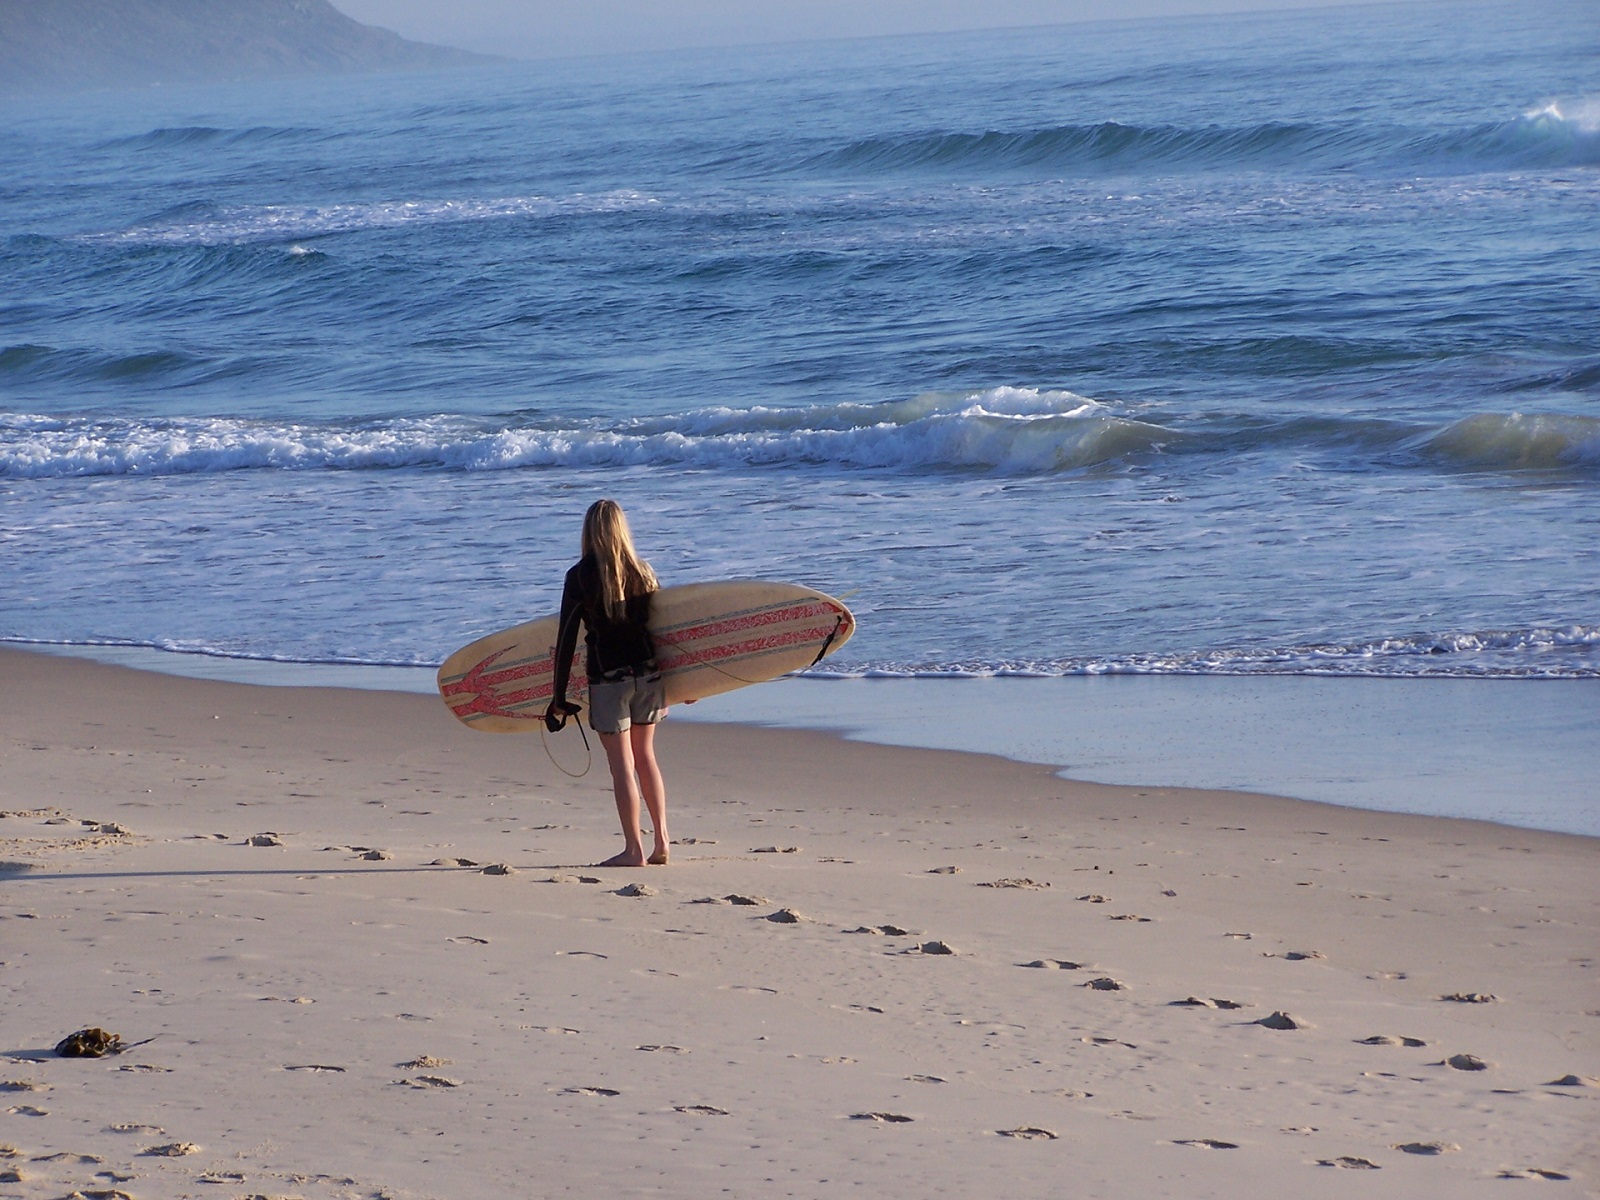 surfer, sports, surfing, beach, ocean, surfboard, wave